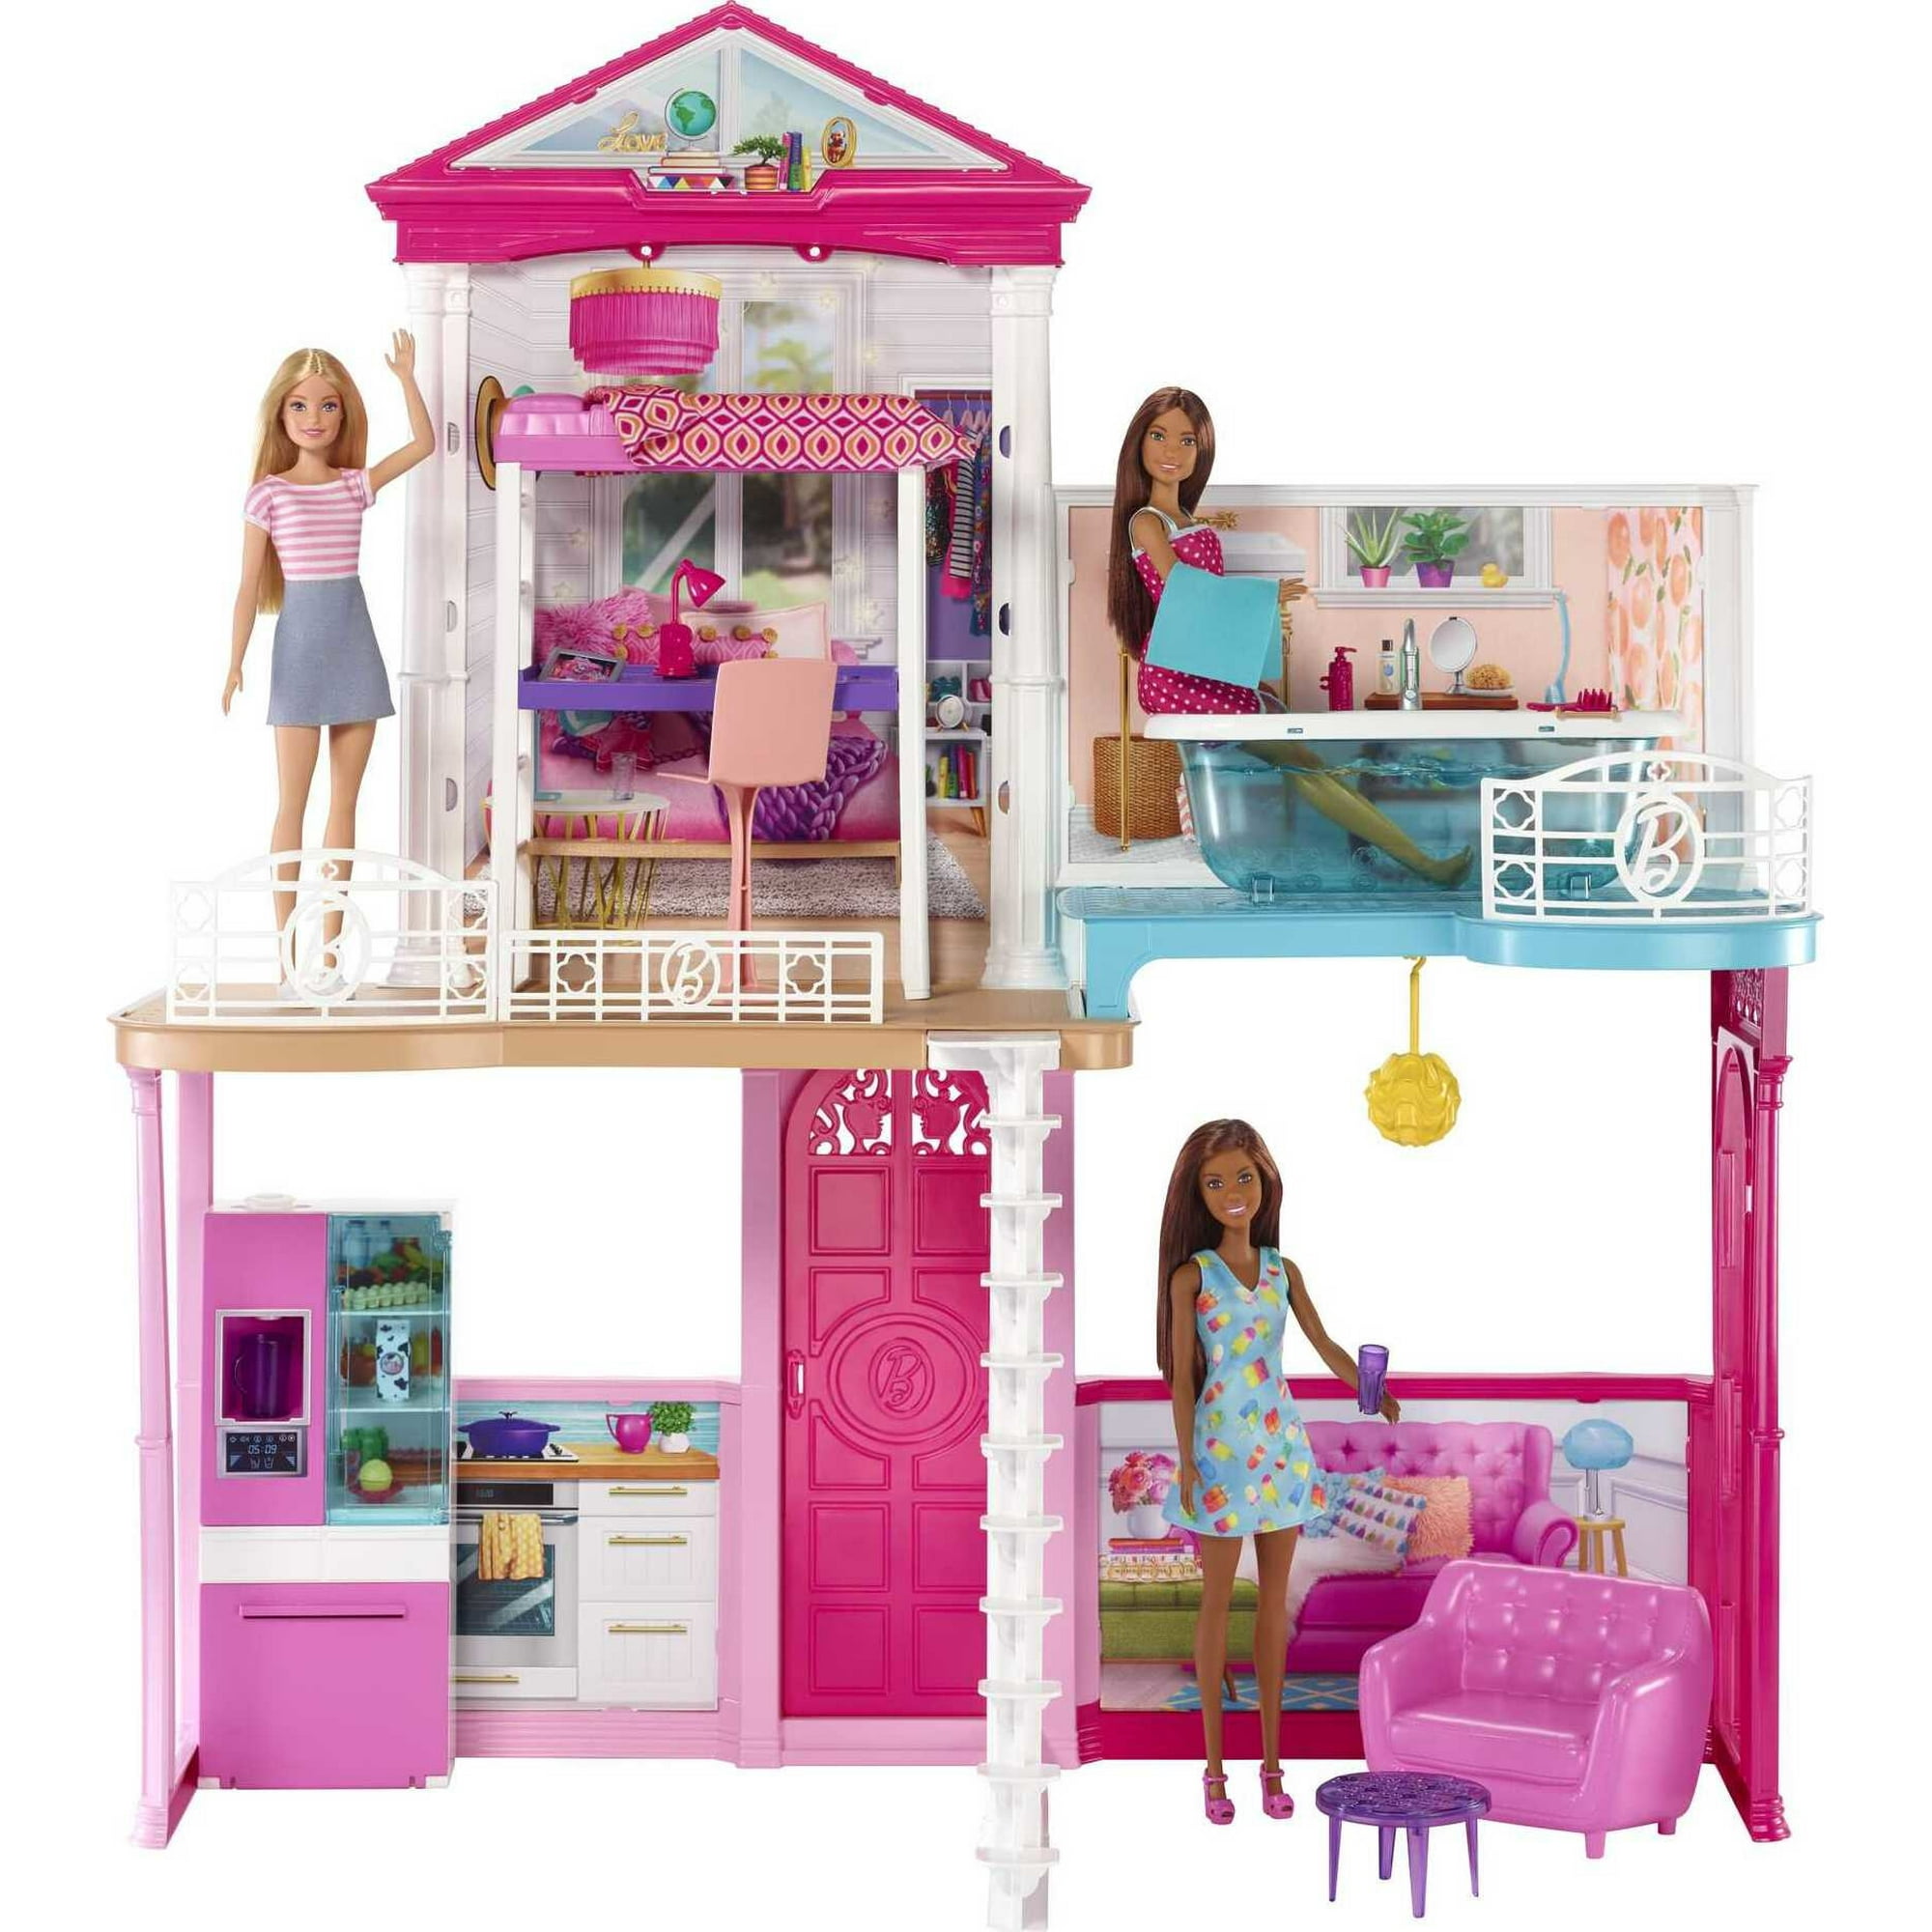 Barbie Dollhouse $75 - Walmart